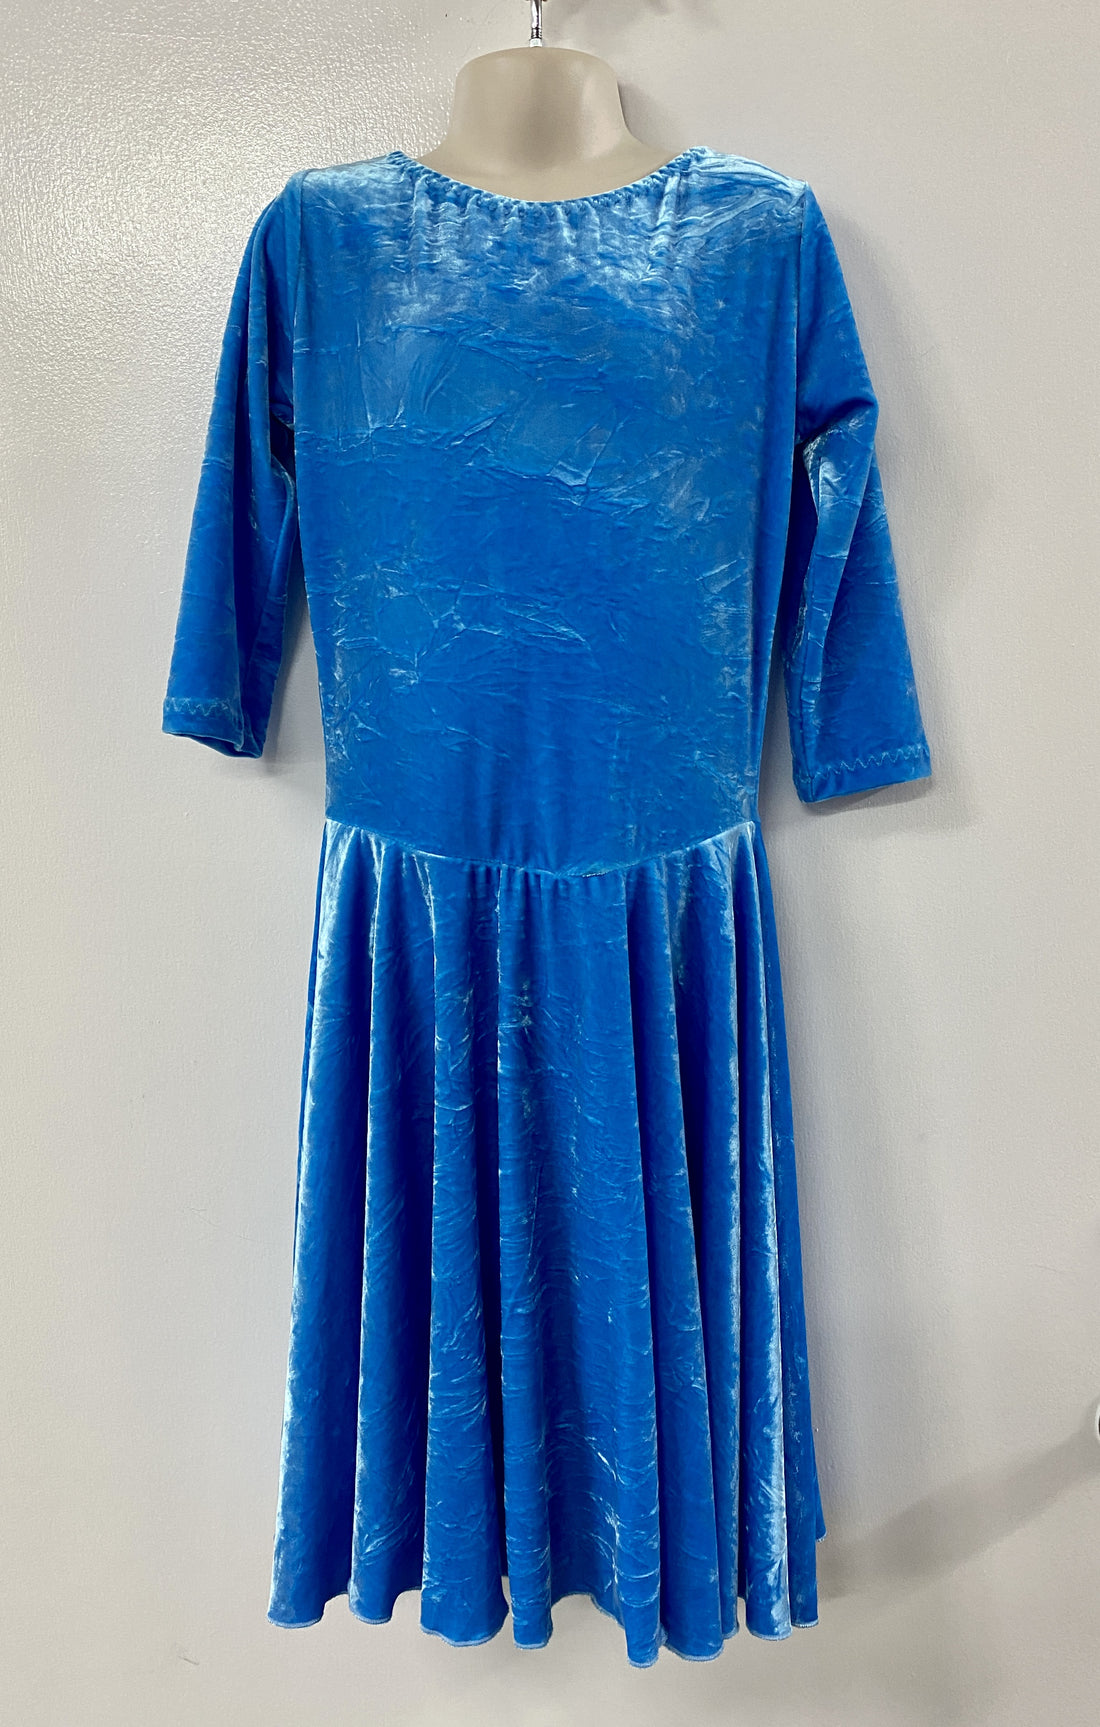 Sky Blue Crushed Velvet Juvenile Dress - Size 8